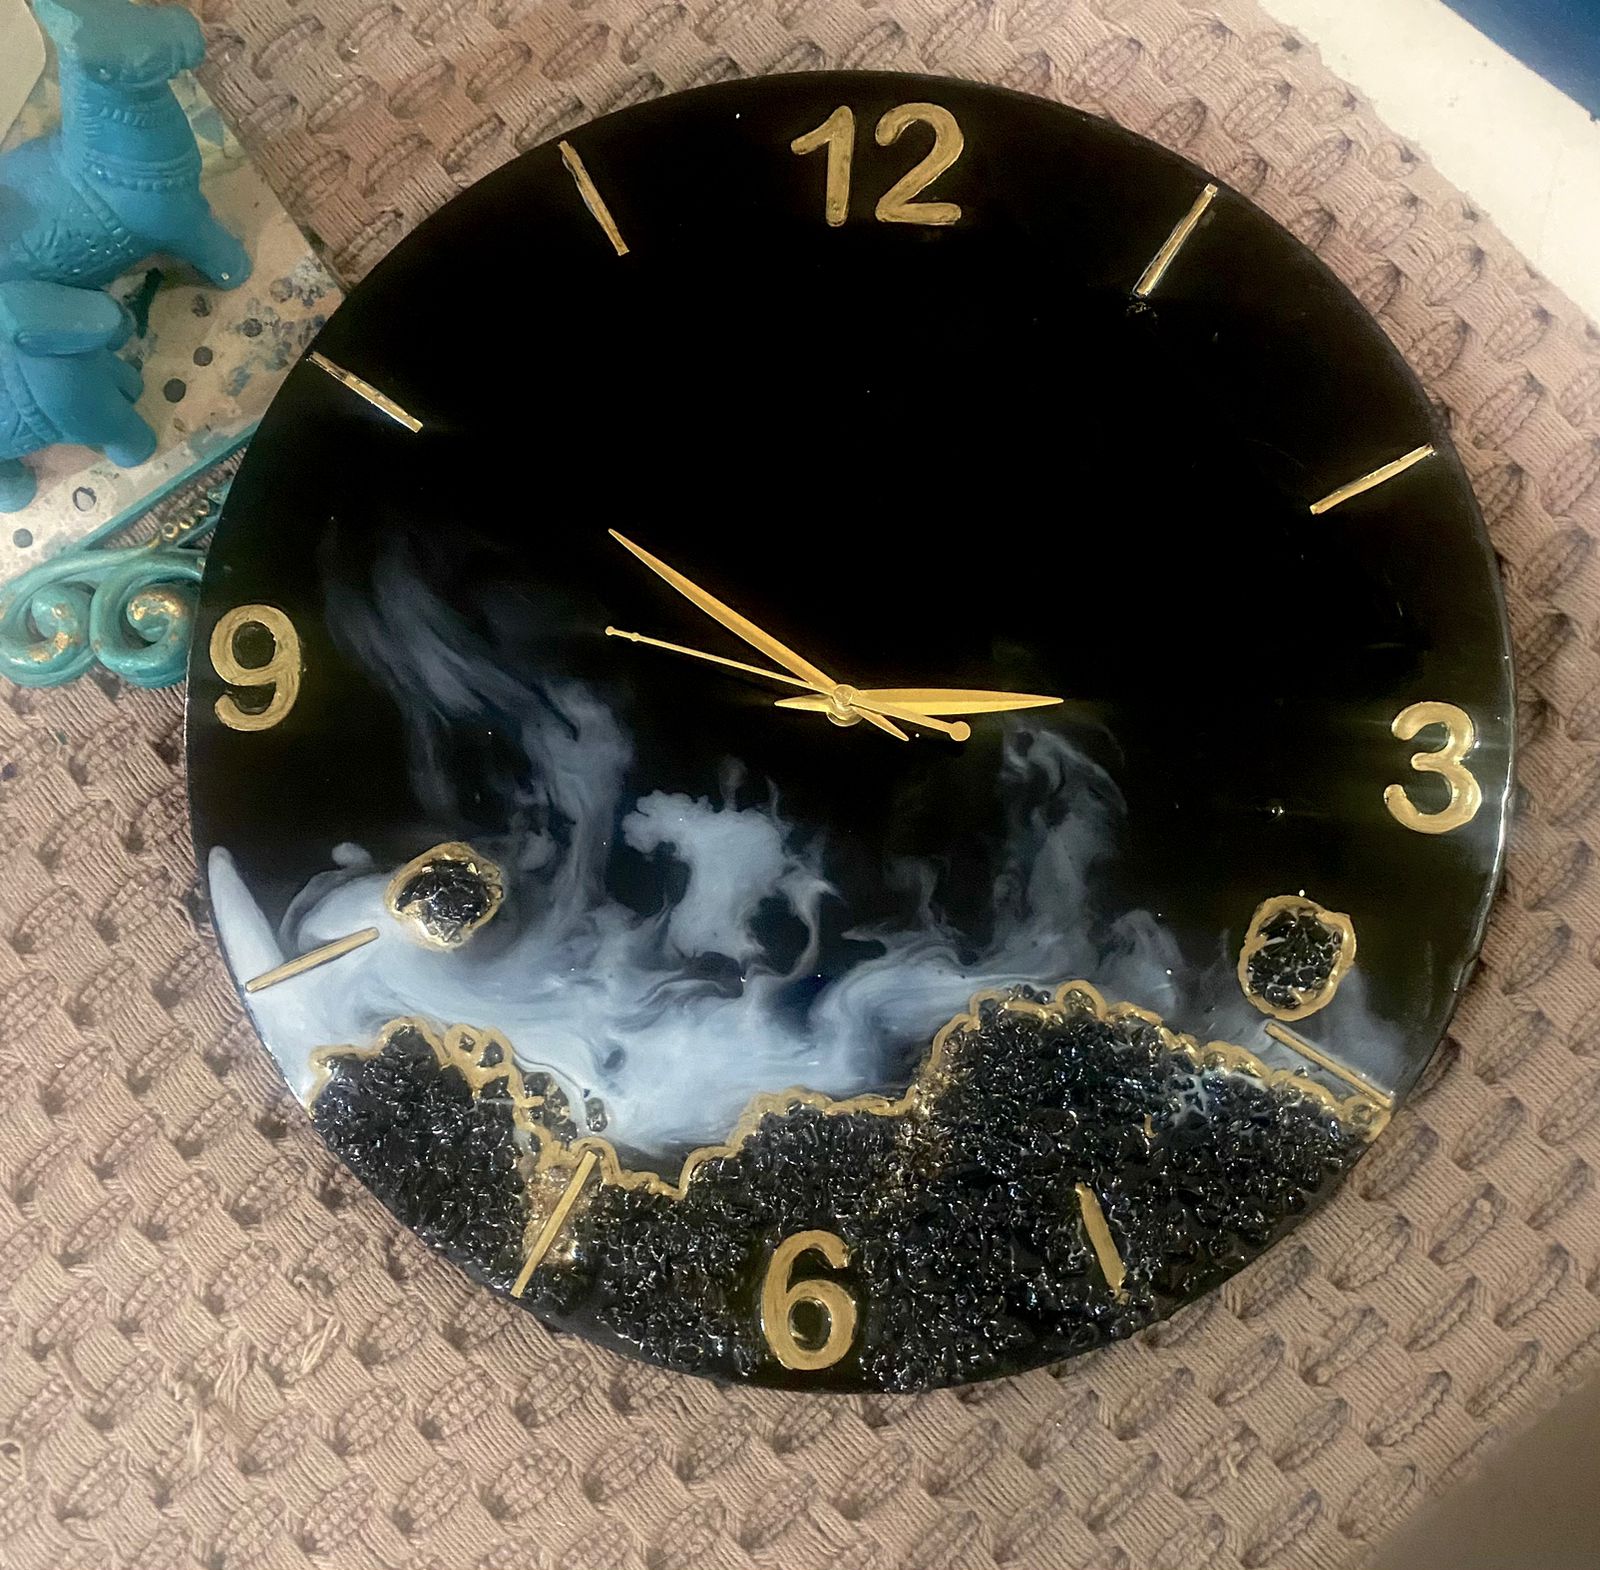 Black Beach Clock